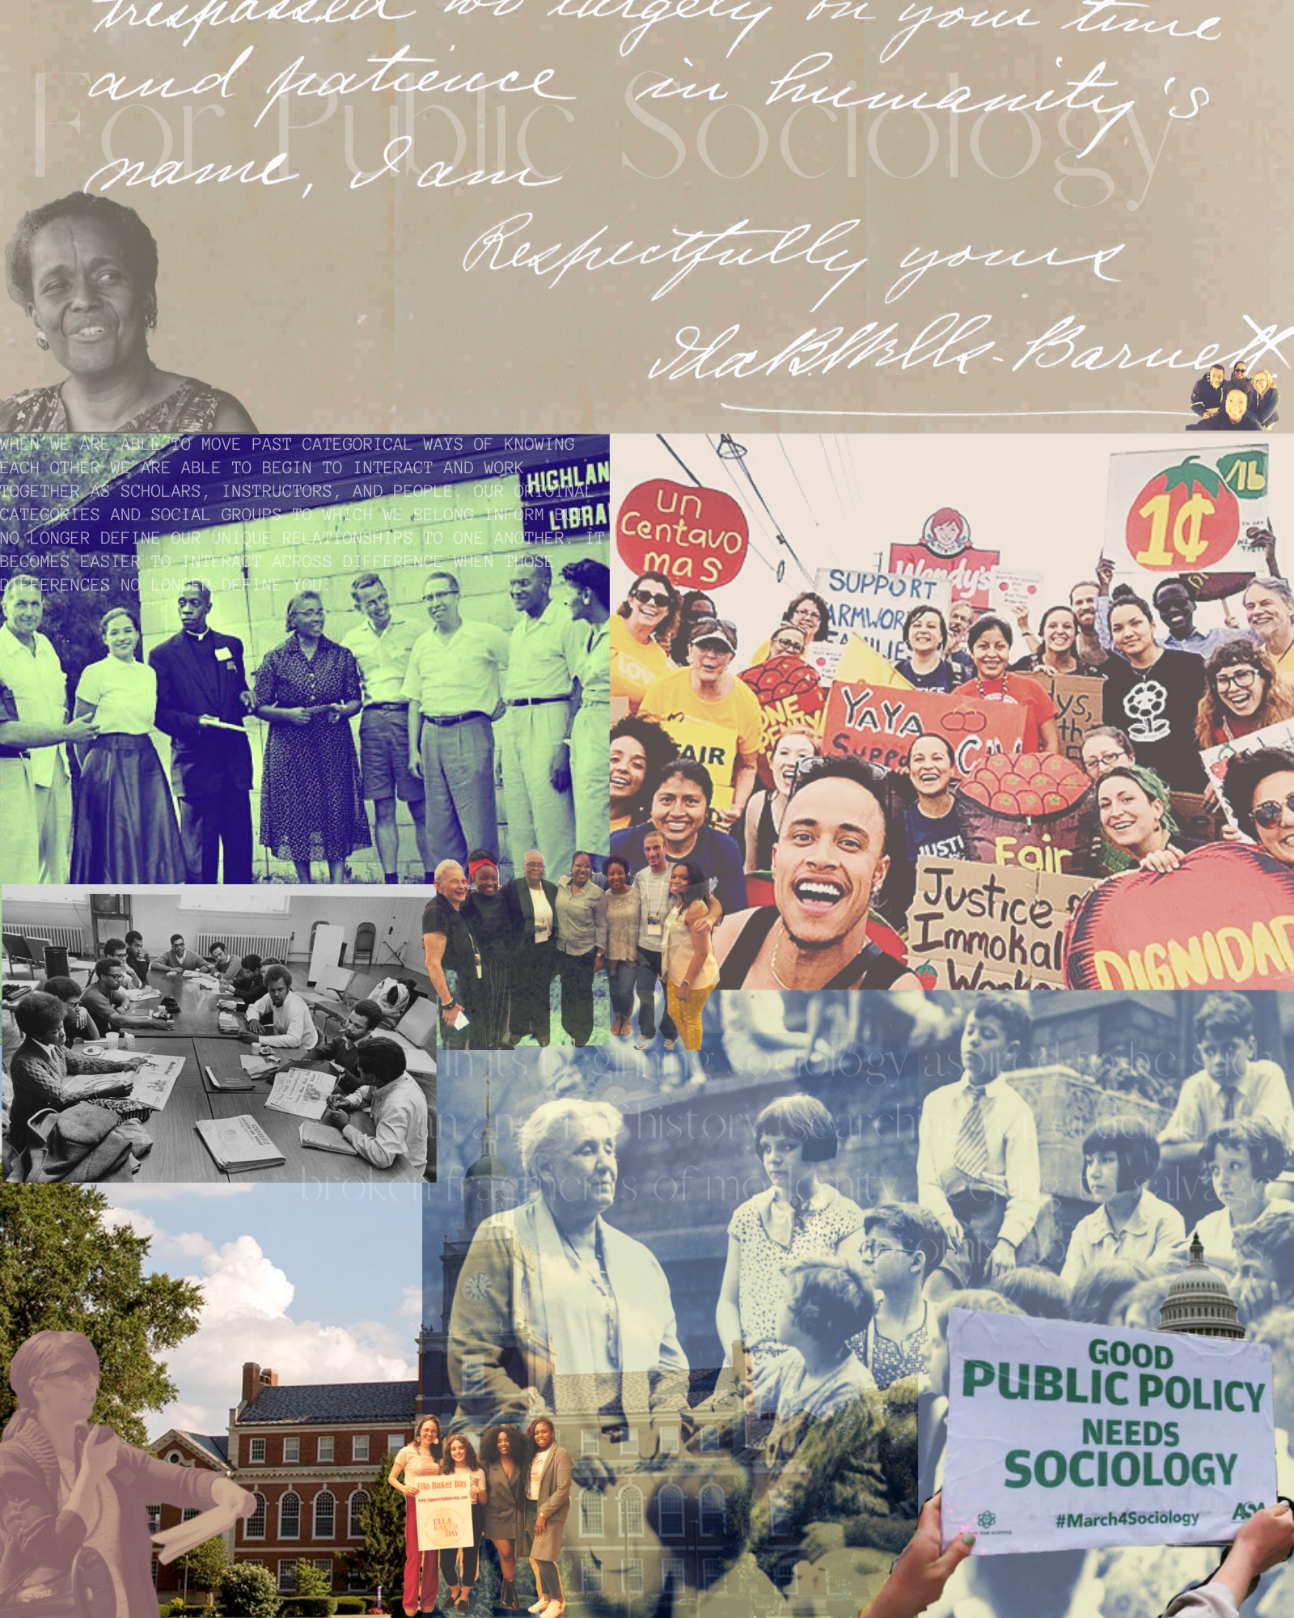 Emily McDonald's Collage of Public Sociology